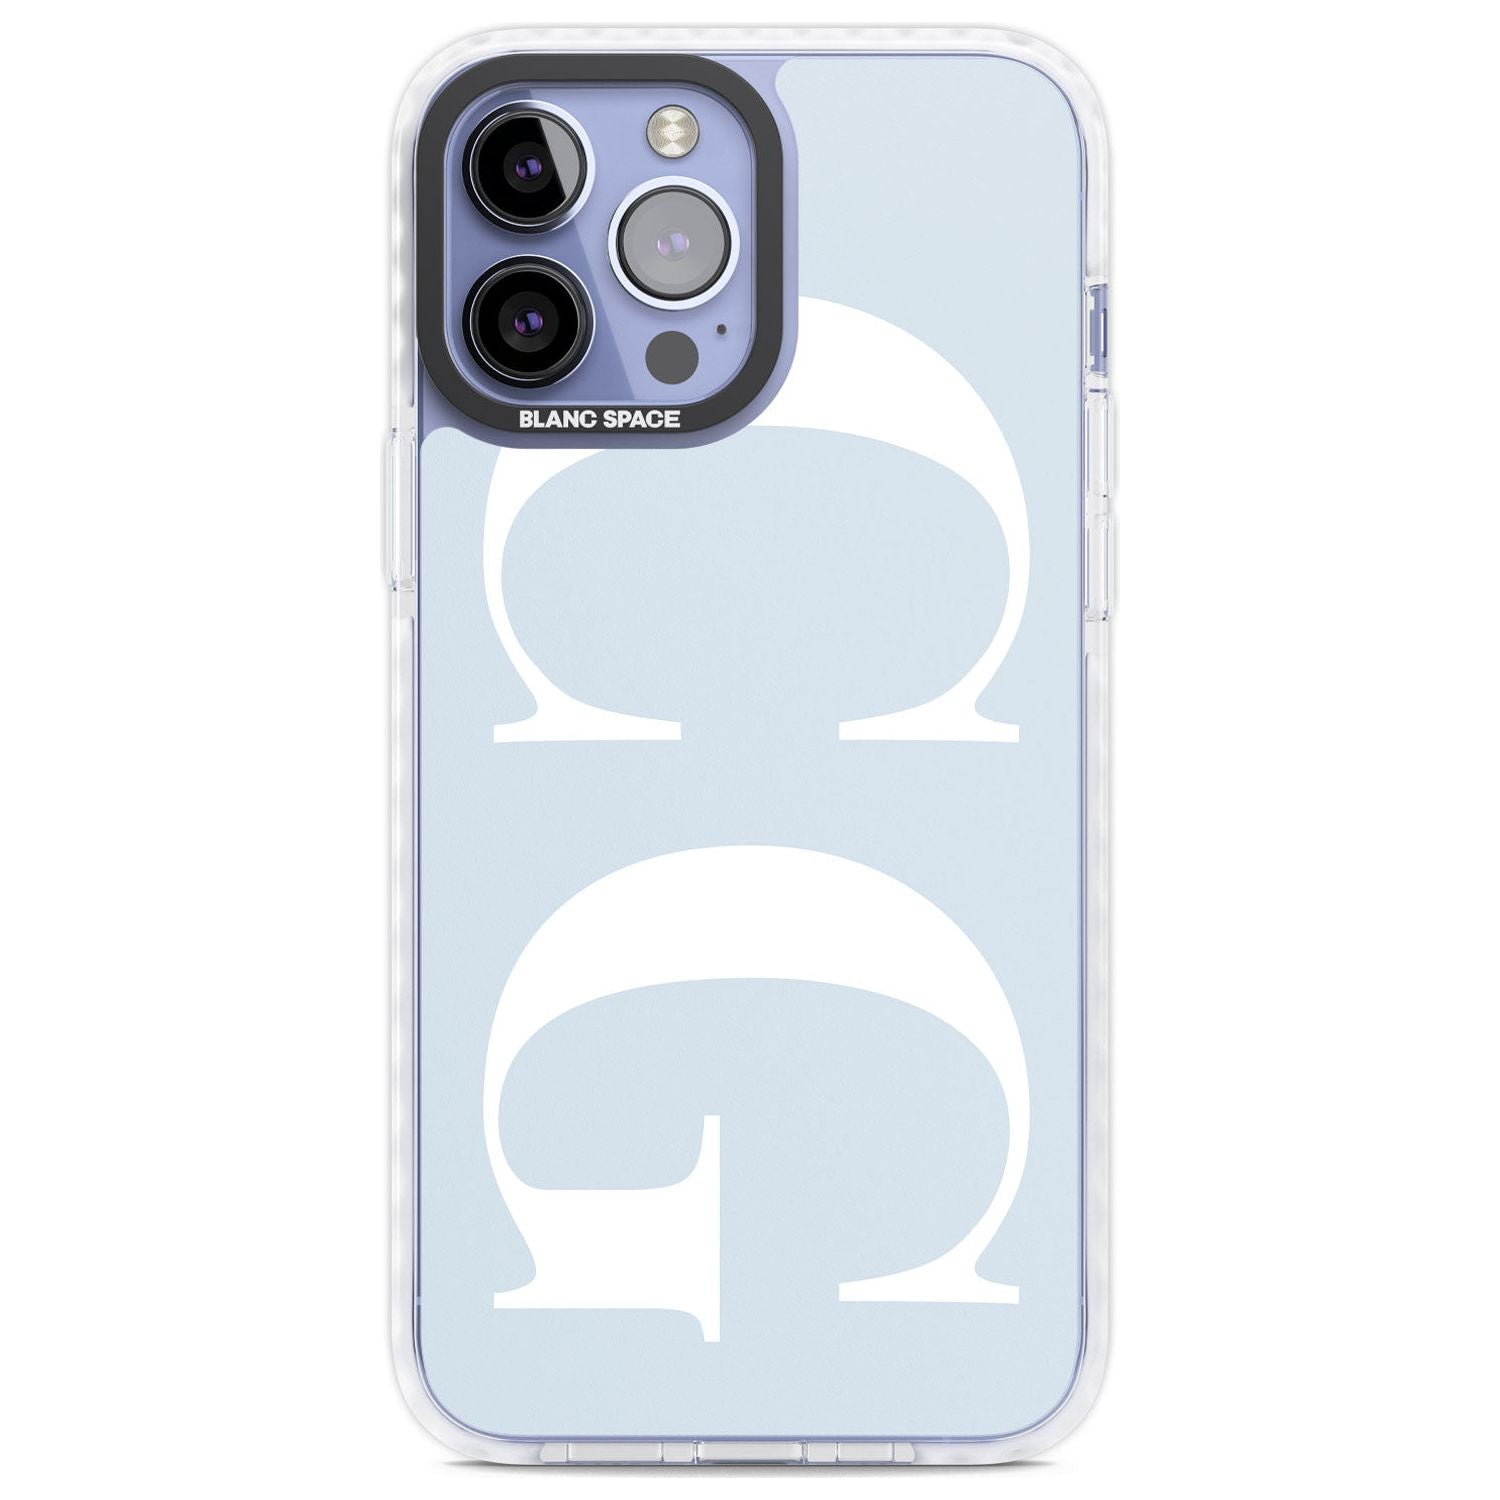 Personalised White & Blue Personalised Custom Phone Case iPhone 13 Pro Max / Impact Case,iPhone 14 Pro Max / Impact Case Blanc Space